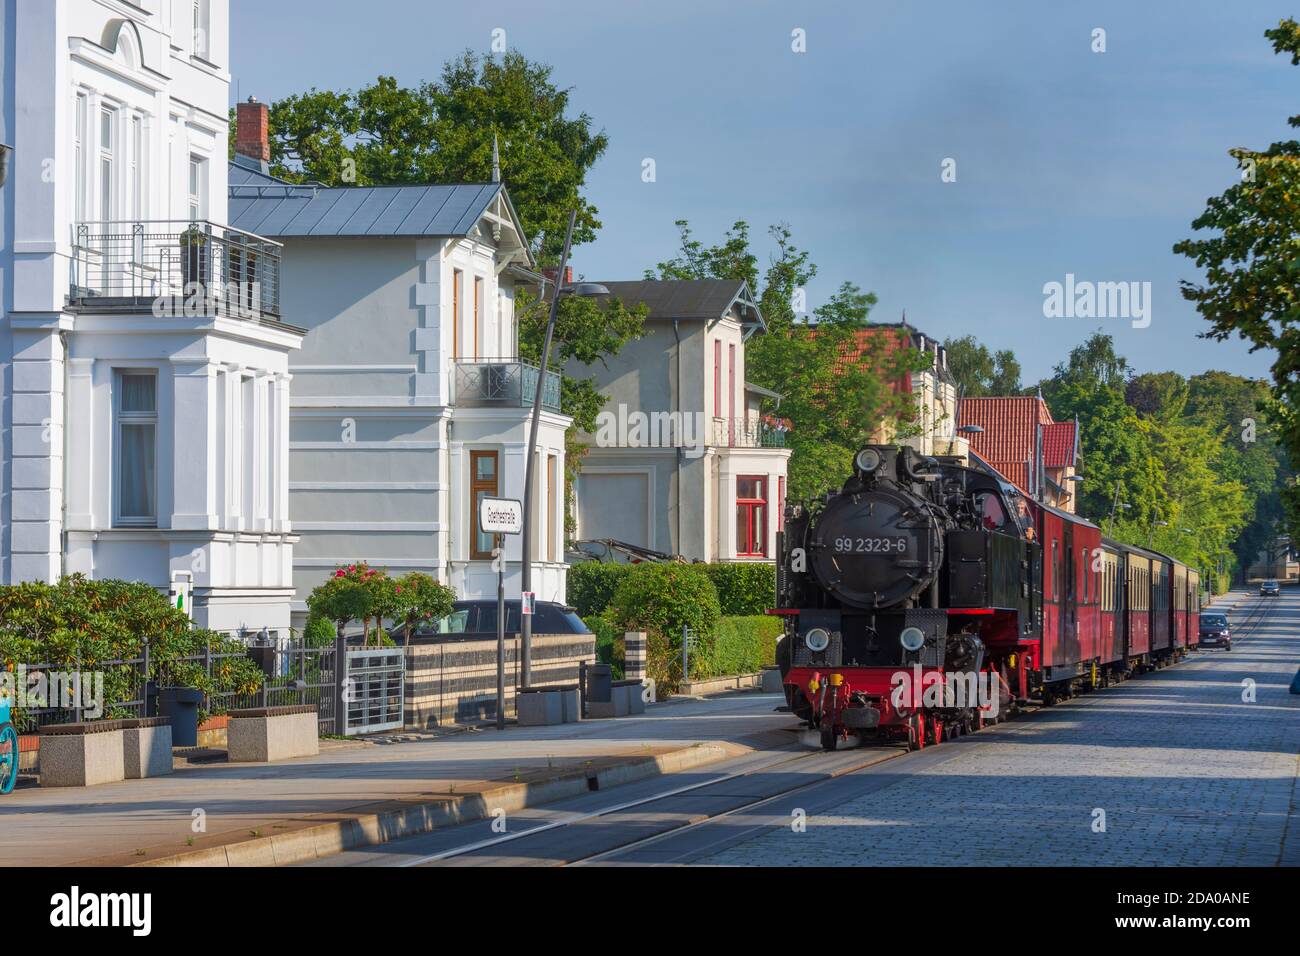 Bad Doberan: Bäderbahn Molli railway, steam locomotive, stop at street Goethestraße, villas, Ostsee (Baltic Sea), Mecklenburg-Vorpommern, Germany Stock Photo